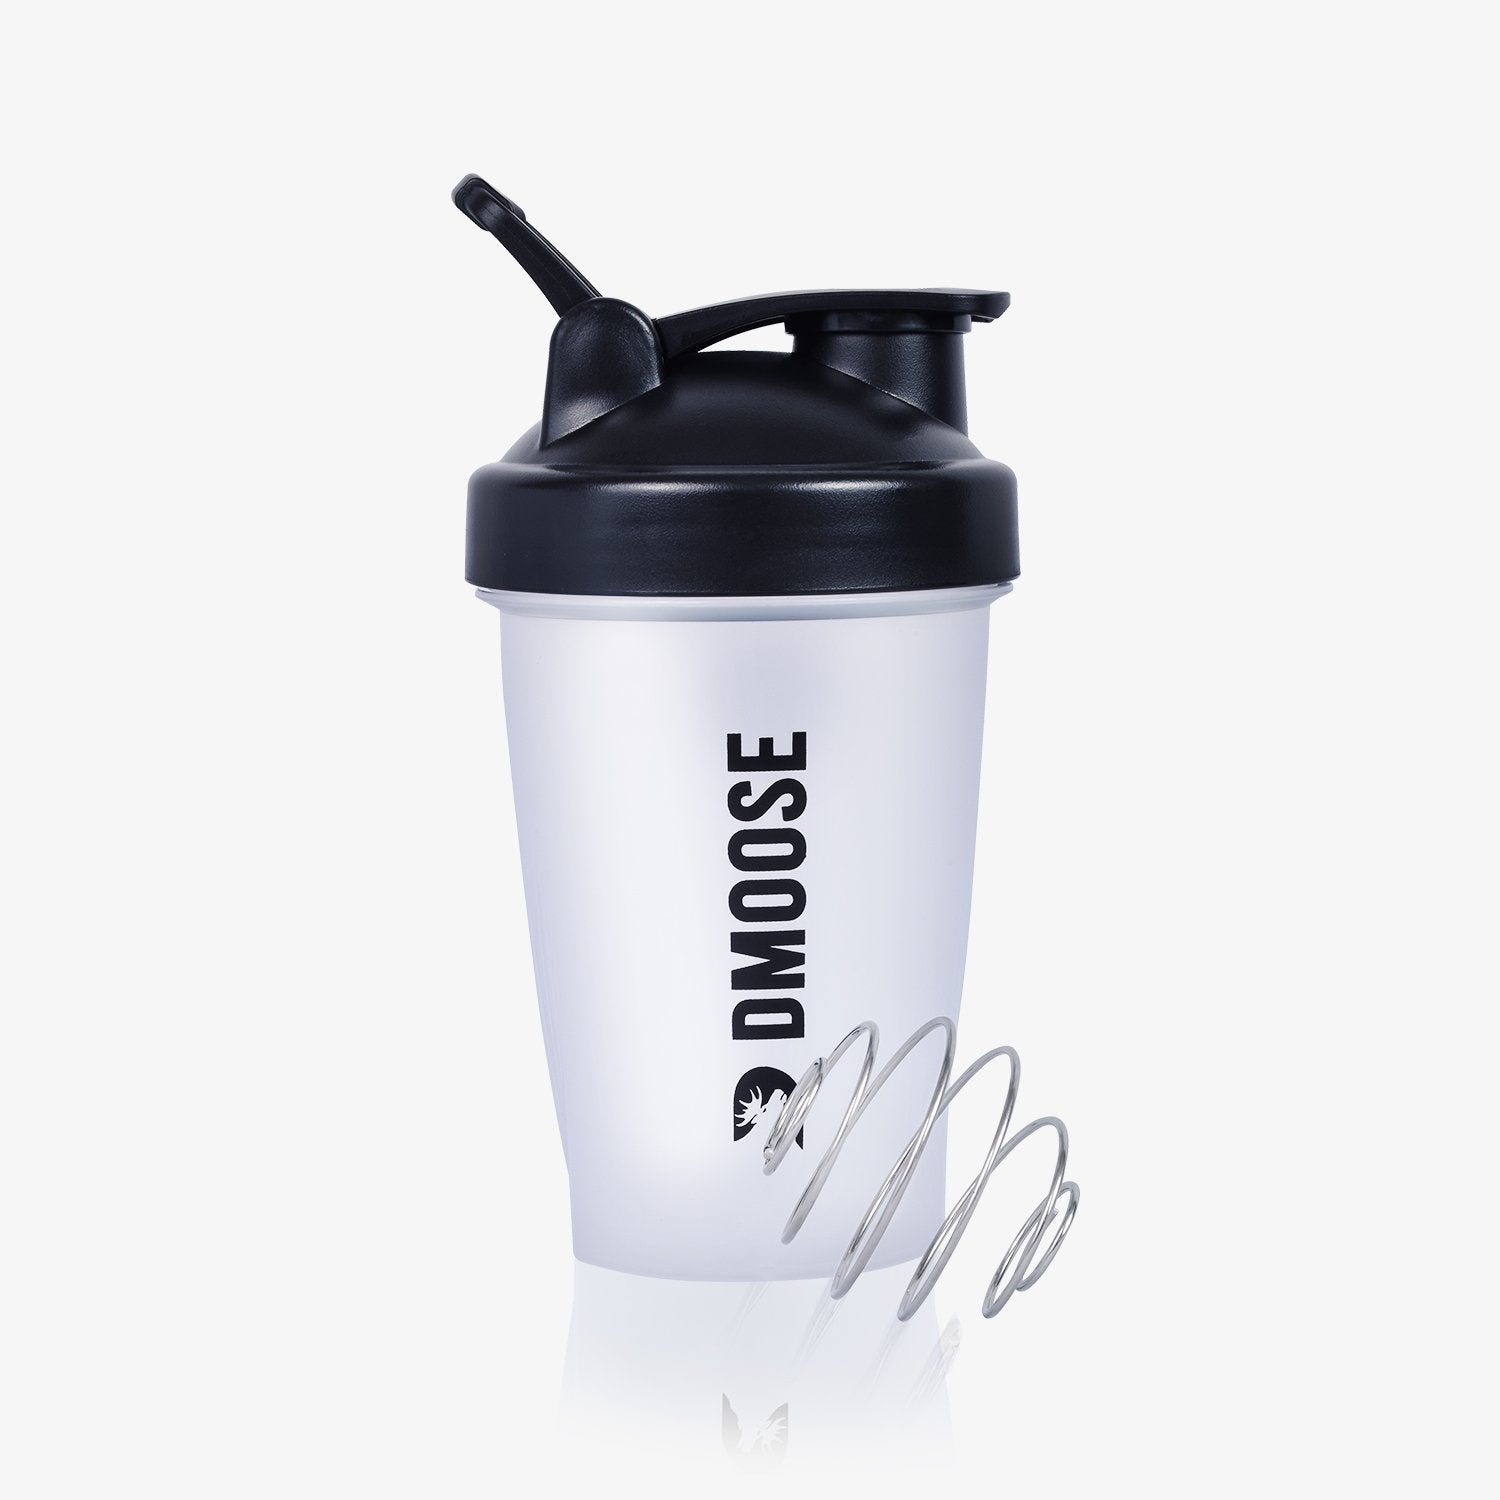 Protein & Workout Shaker Bottle, Best Mixer Bottle